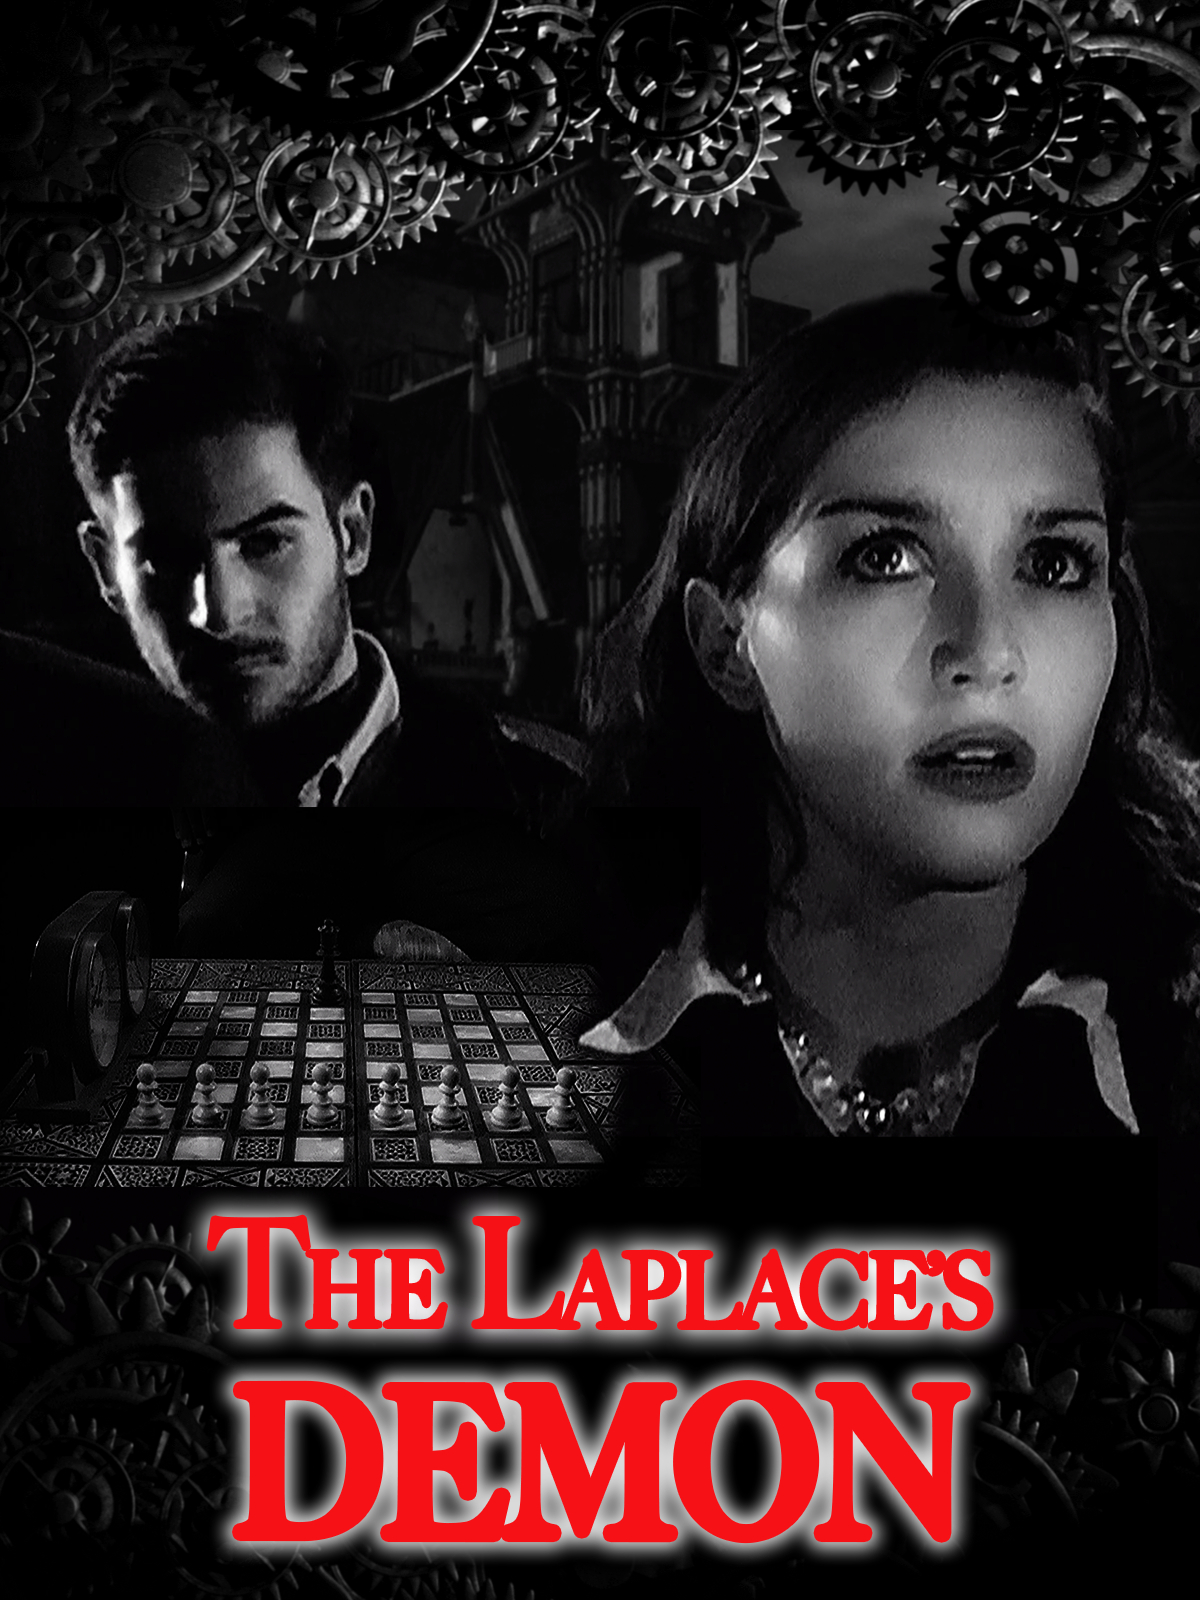 The Laplace's Demon (2017) Screenshot 5